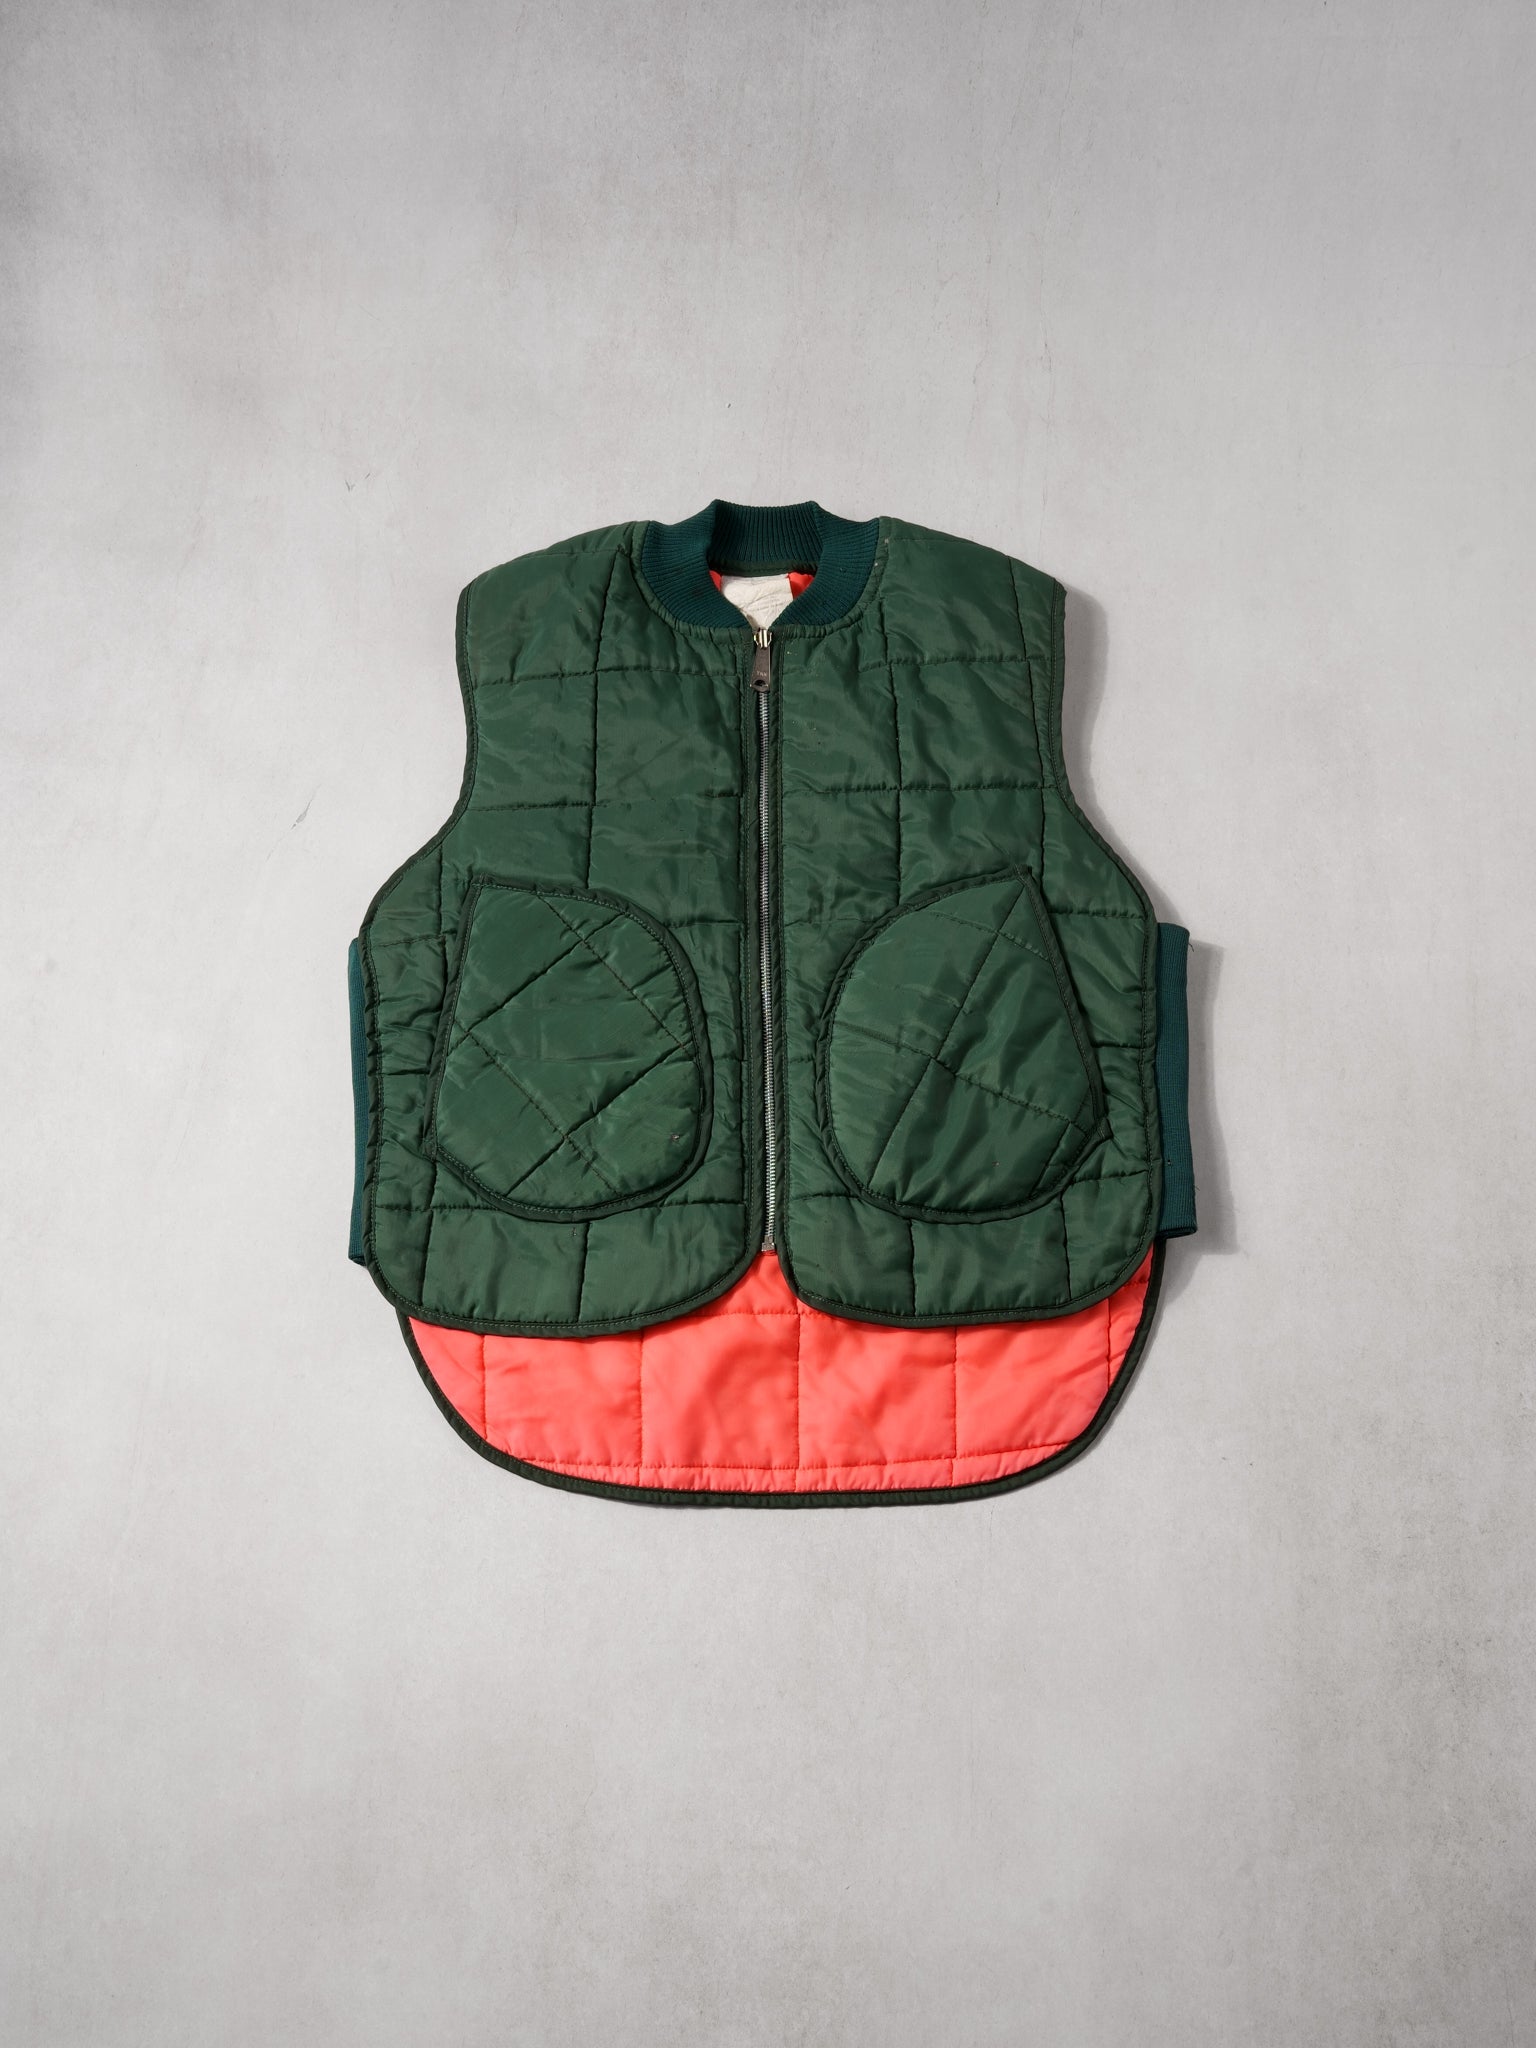 Vintage Forest Green and Orange Reversible Puff Vest (M)